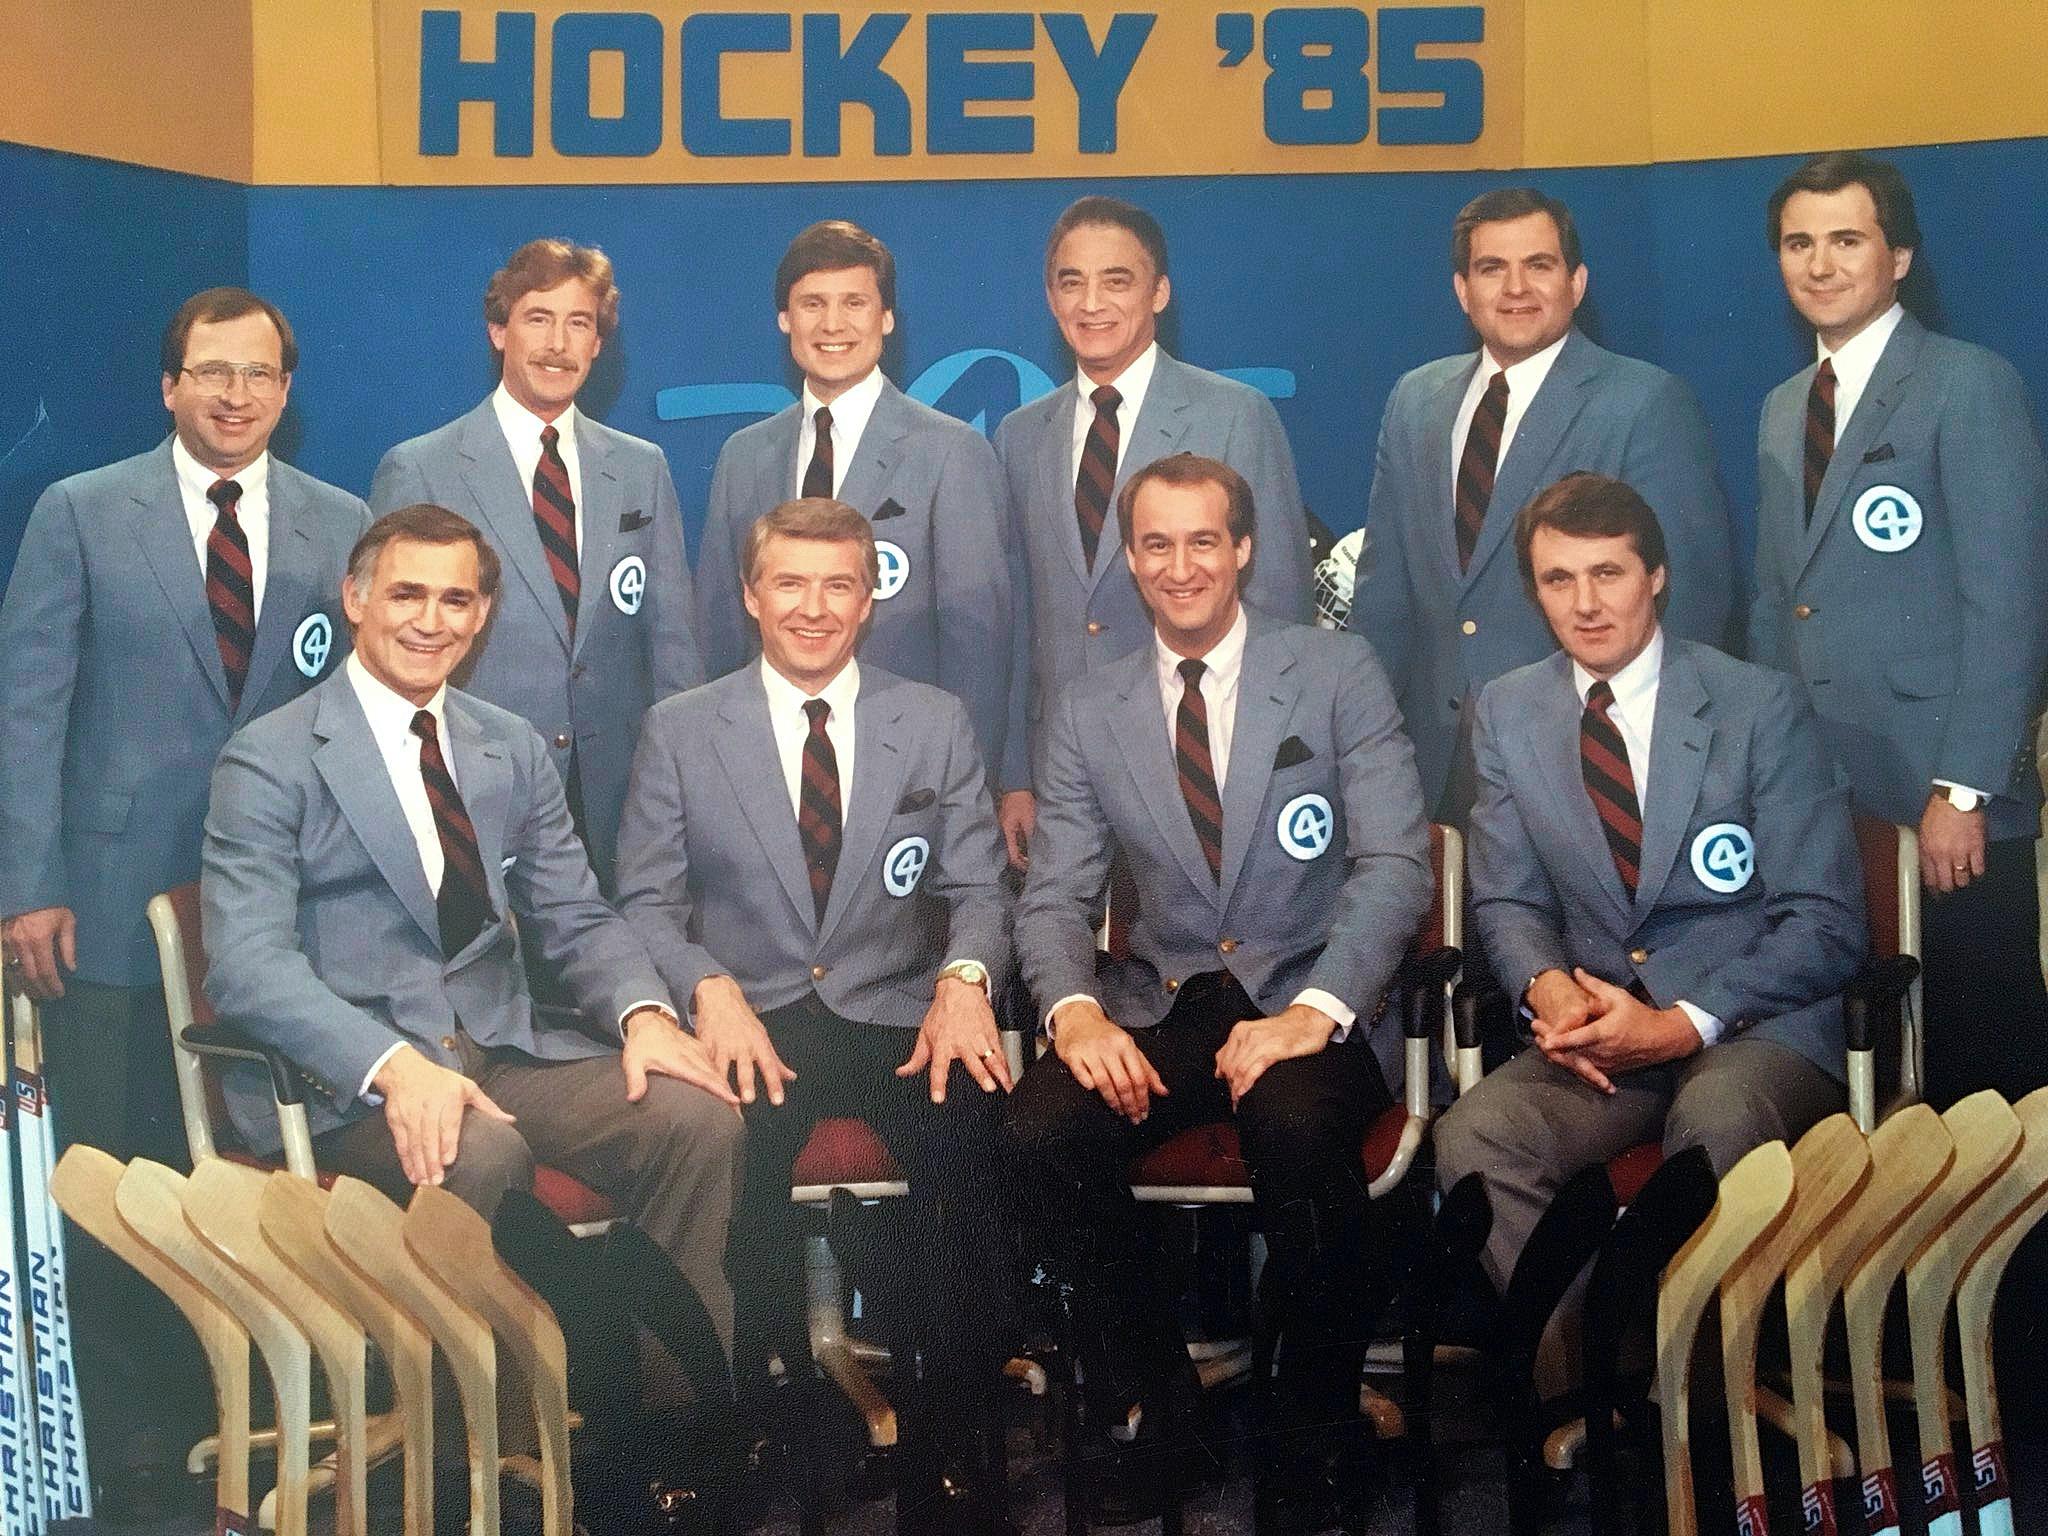 Hockey_1985_WCCO_Broadcast_Team